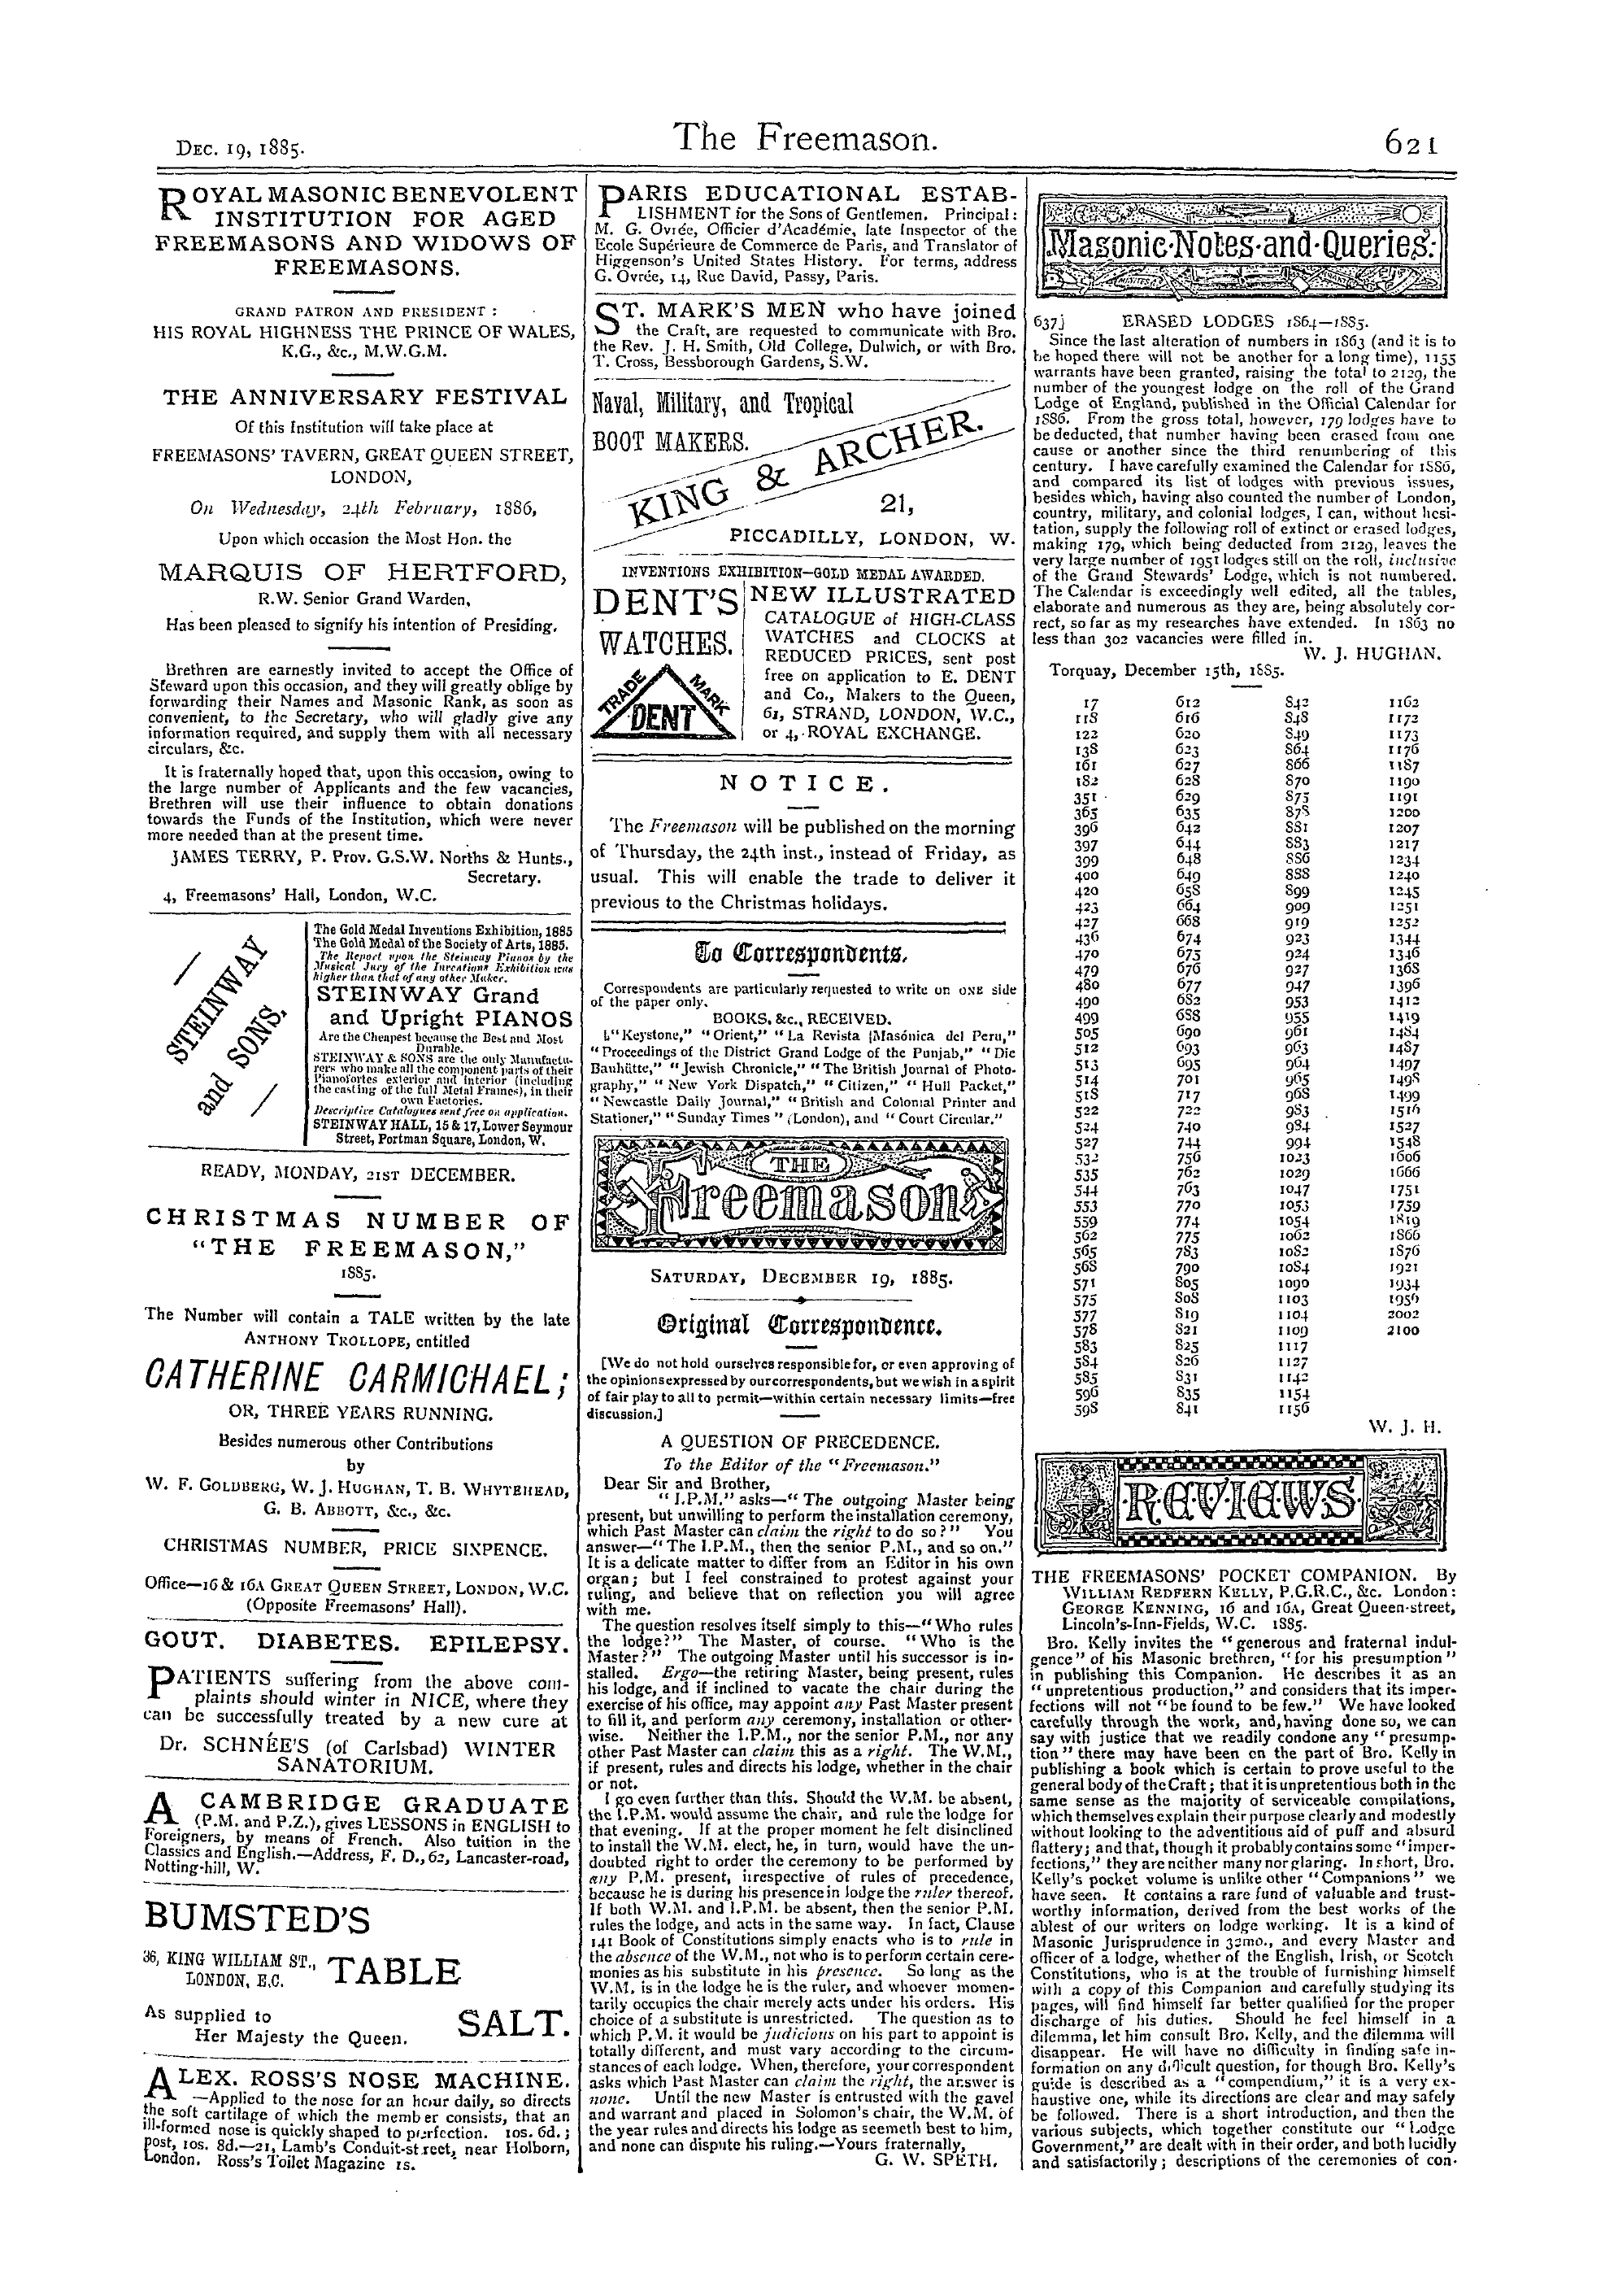 The Freemason: 1885-12-19 - Reviews